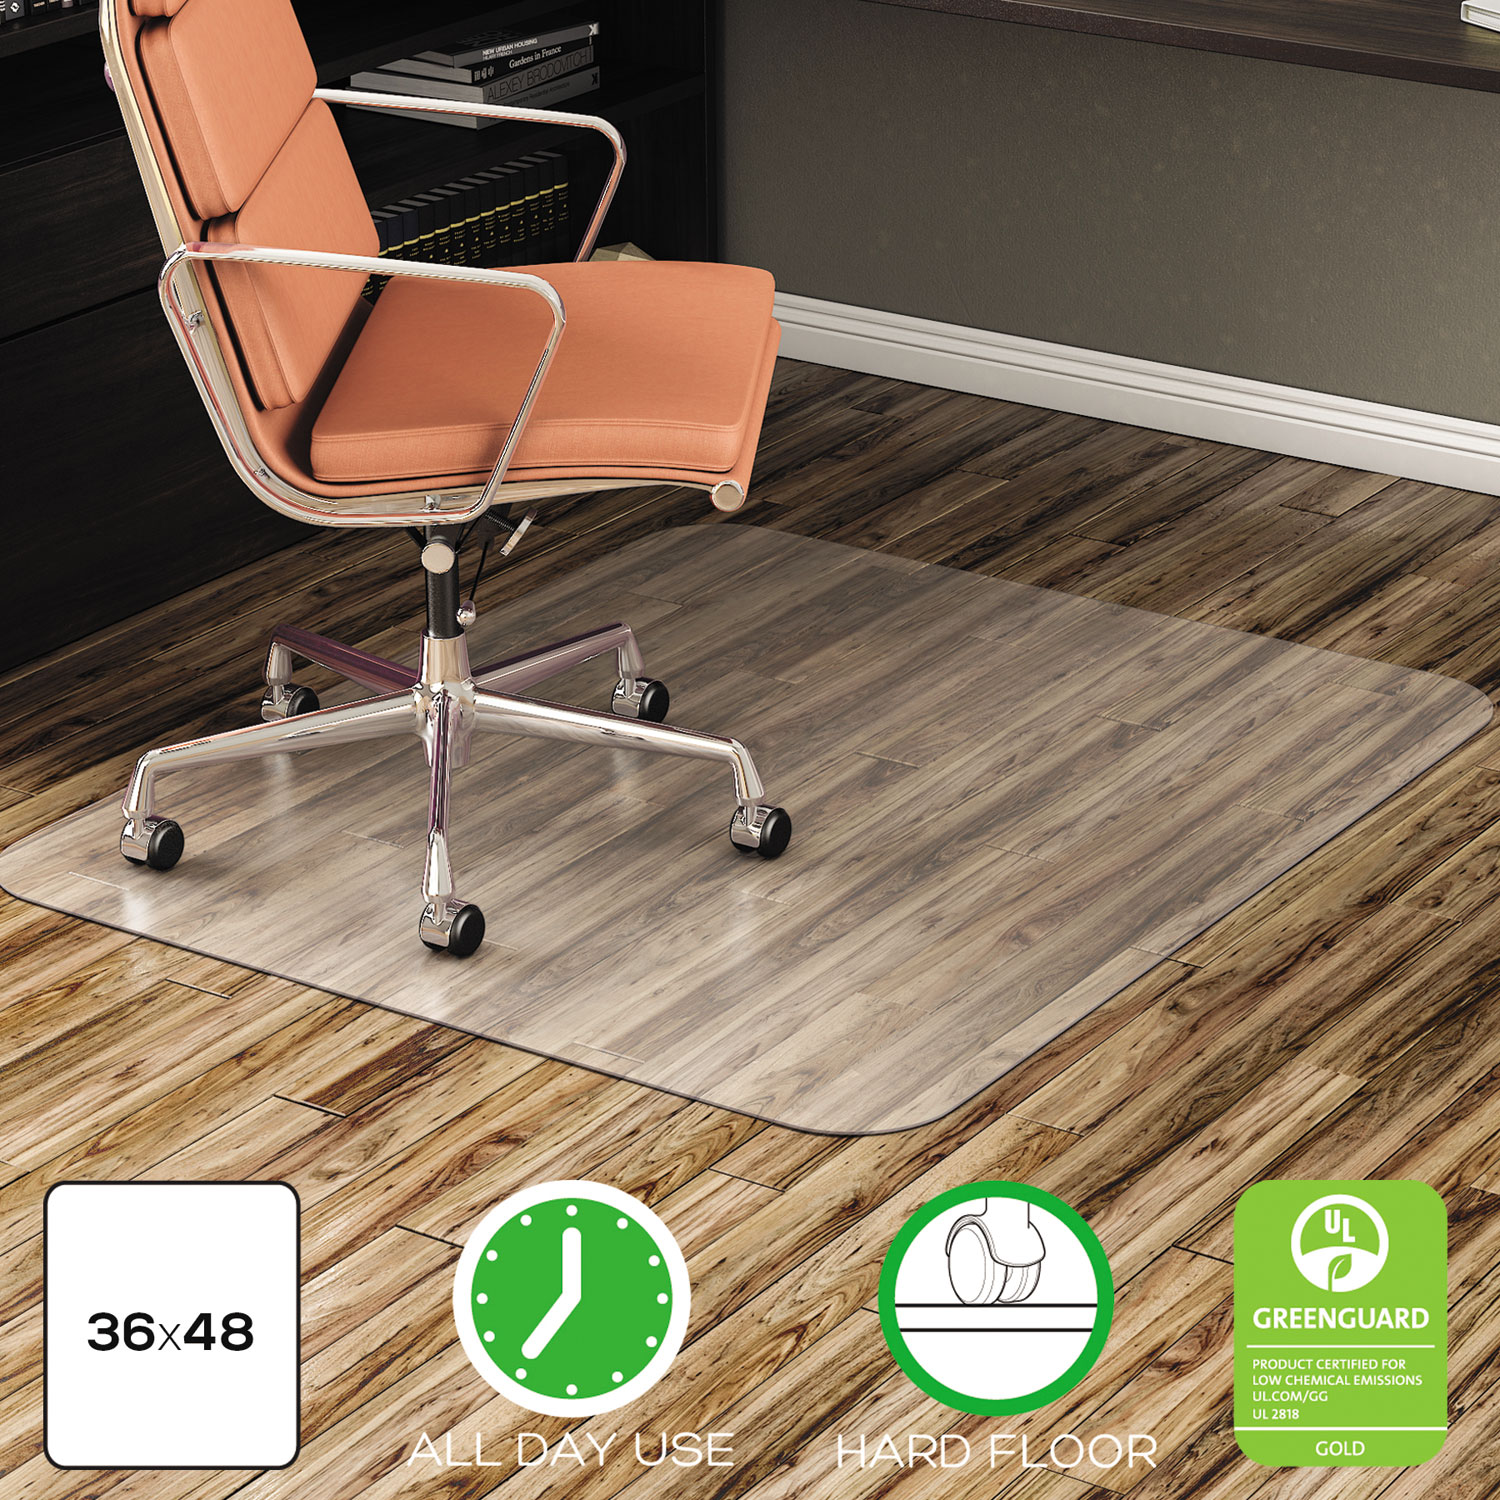  deflecto CM2E142 EconoMat All Day Use Chair Mat for Hard Floors, 36 x 48, Rectangular, Clear (DEFCM2E142) 